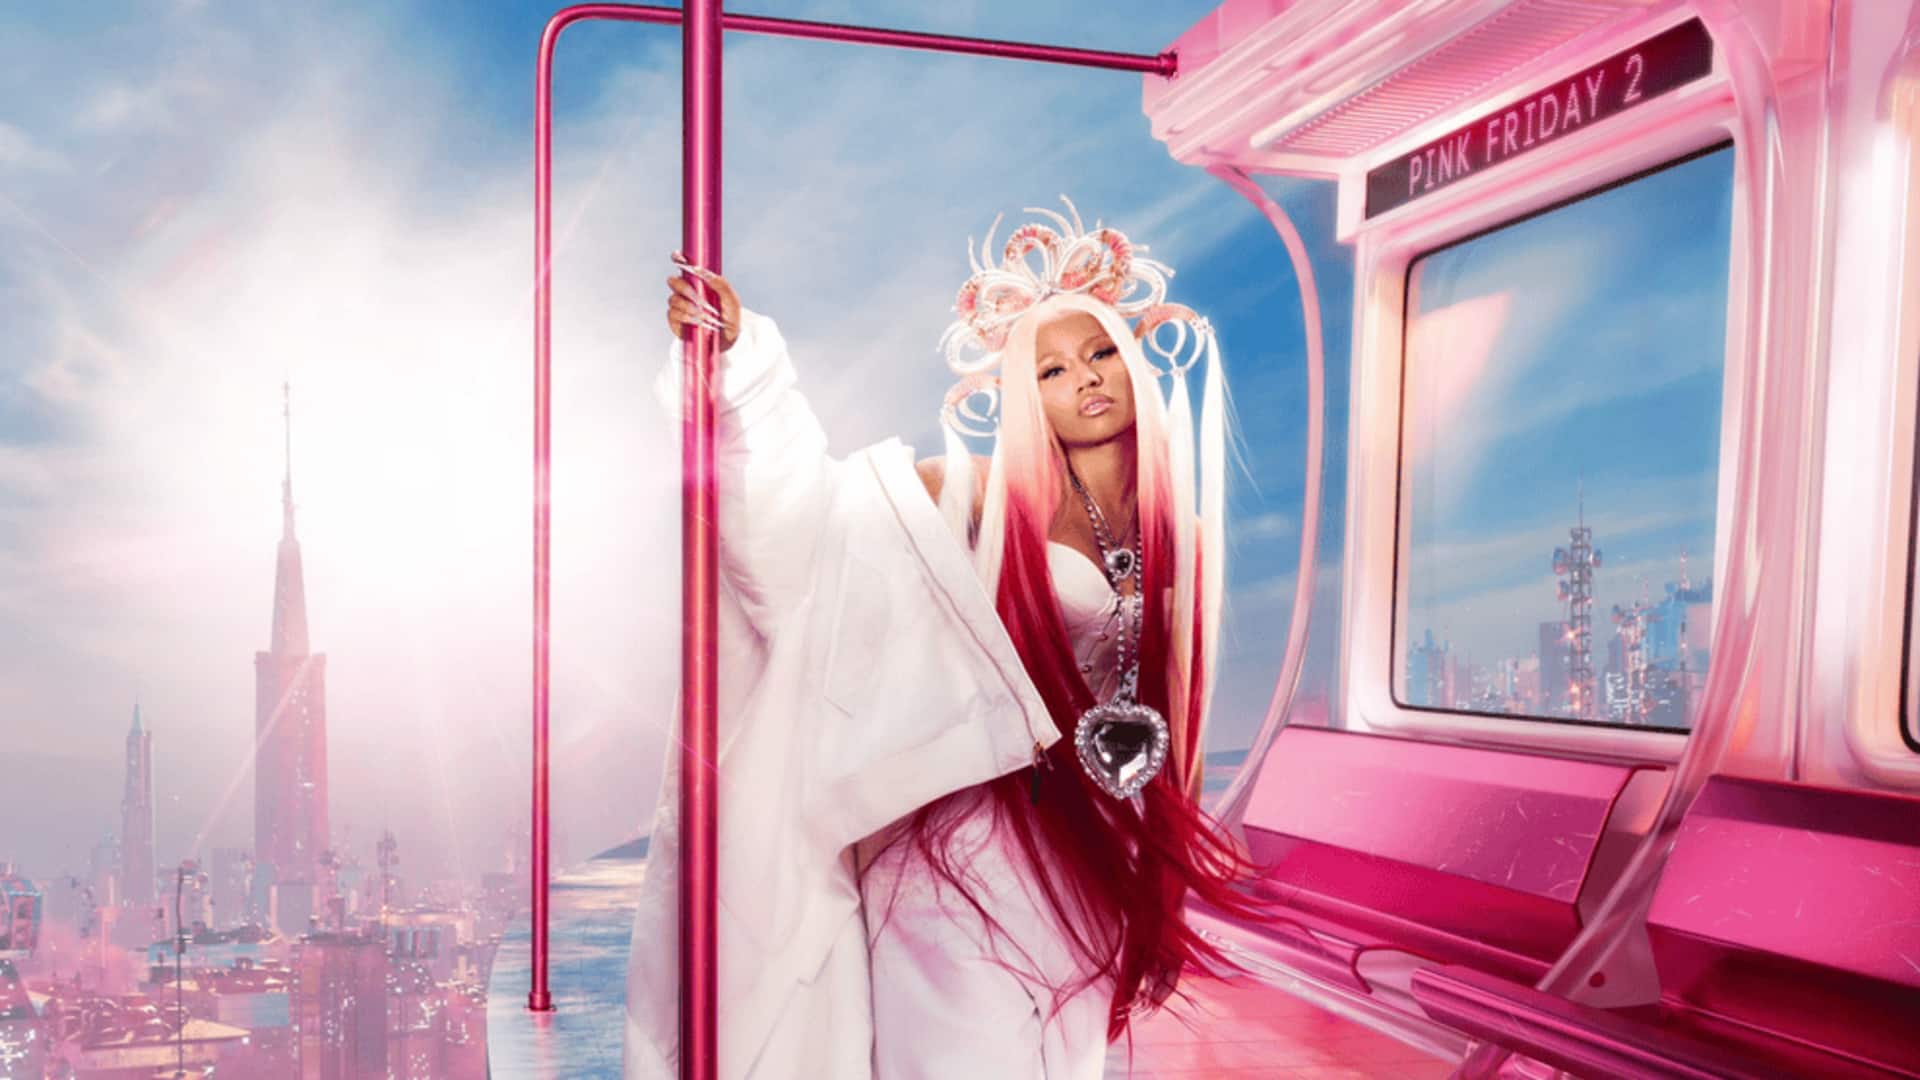 Nicki Minaj unveils 'Pink Friday 2' teaser ahead of release